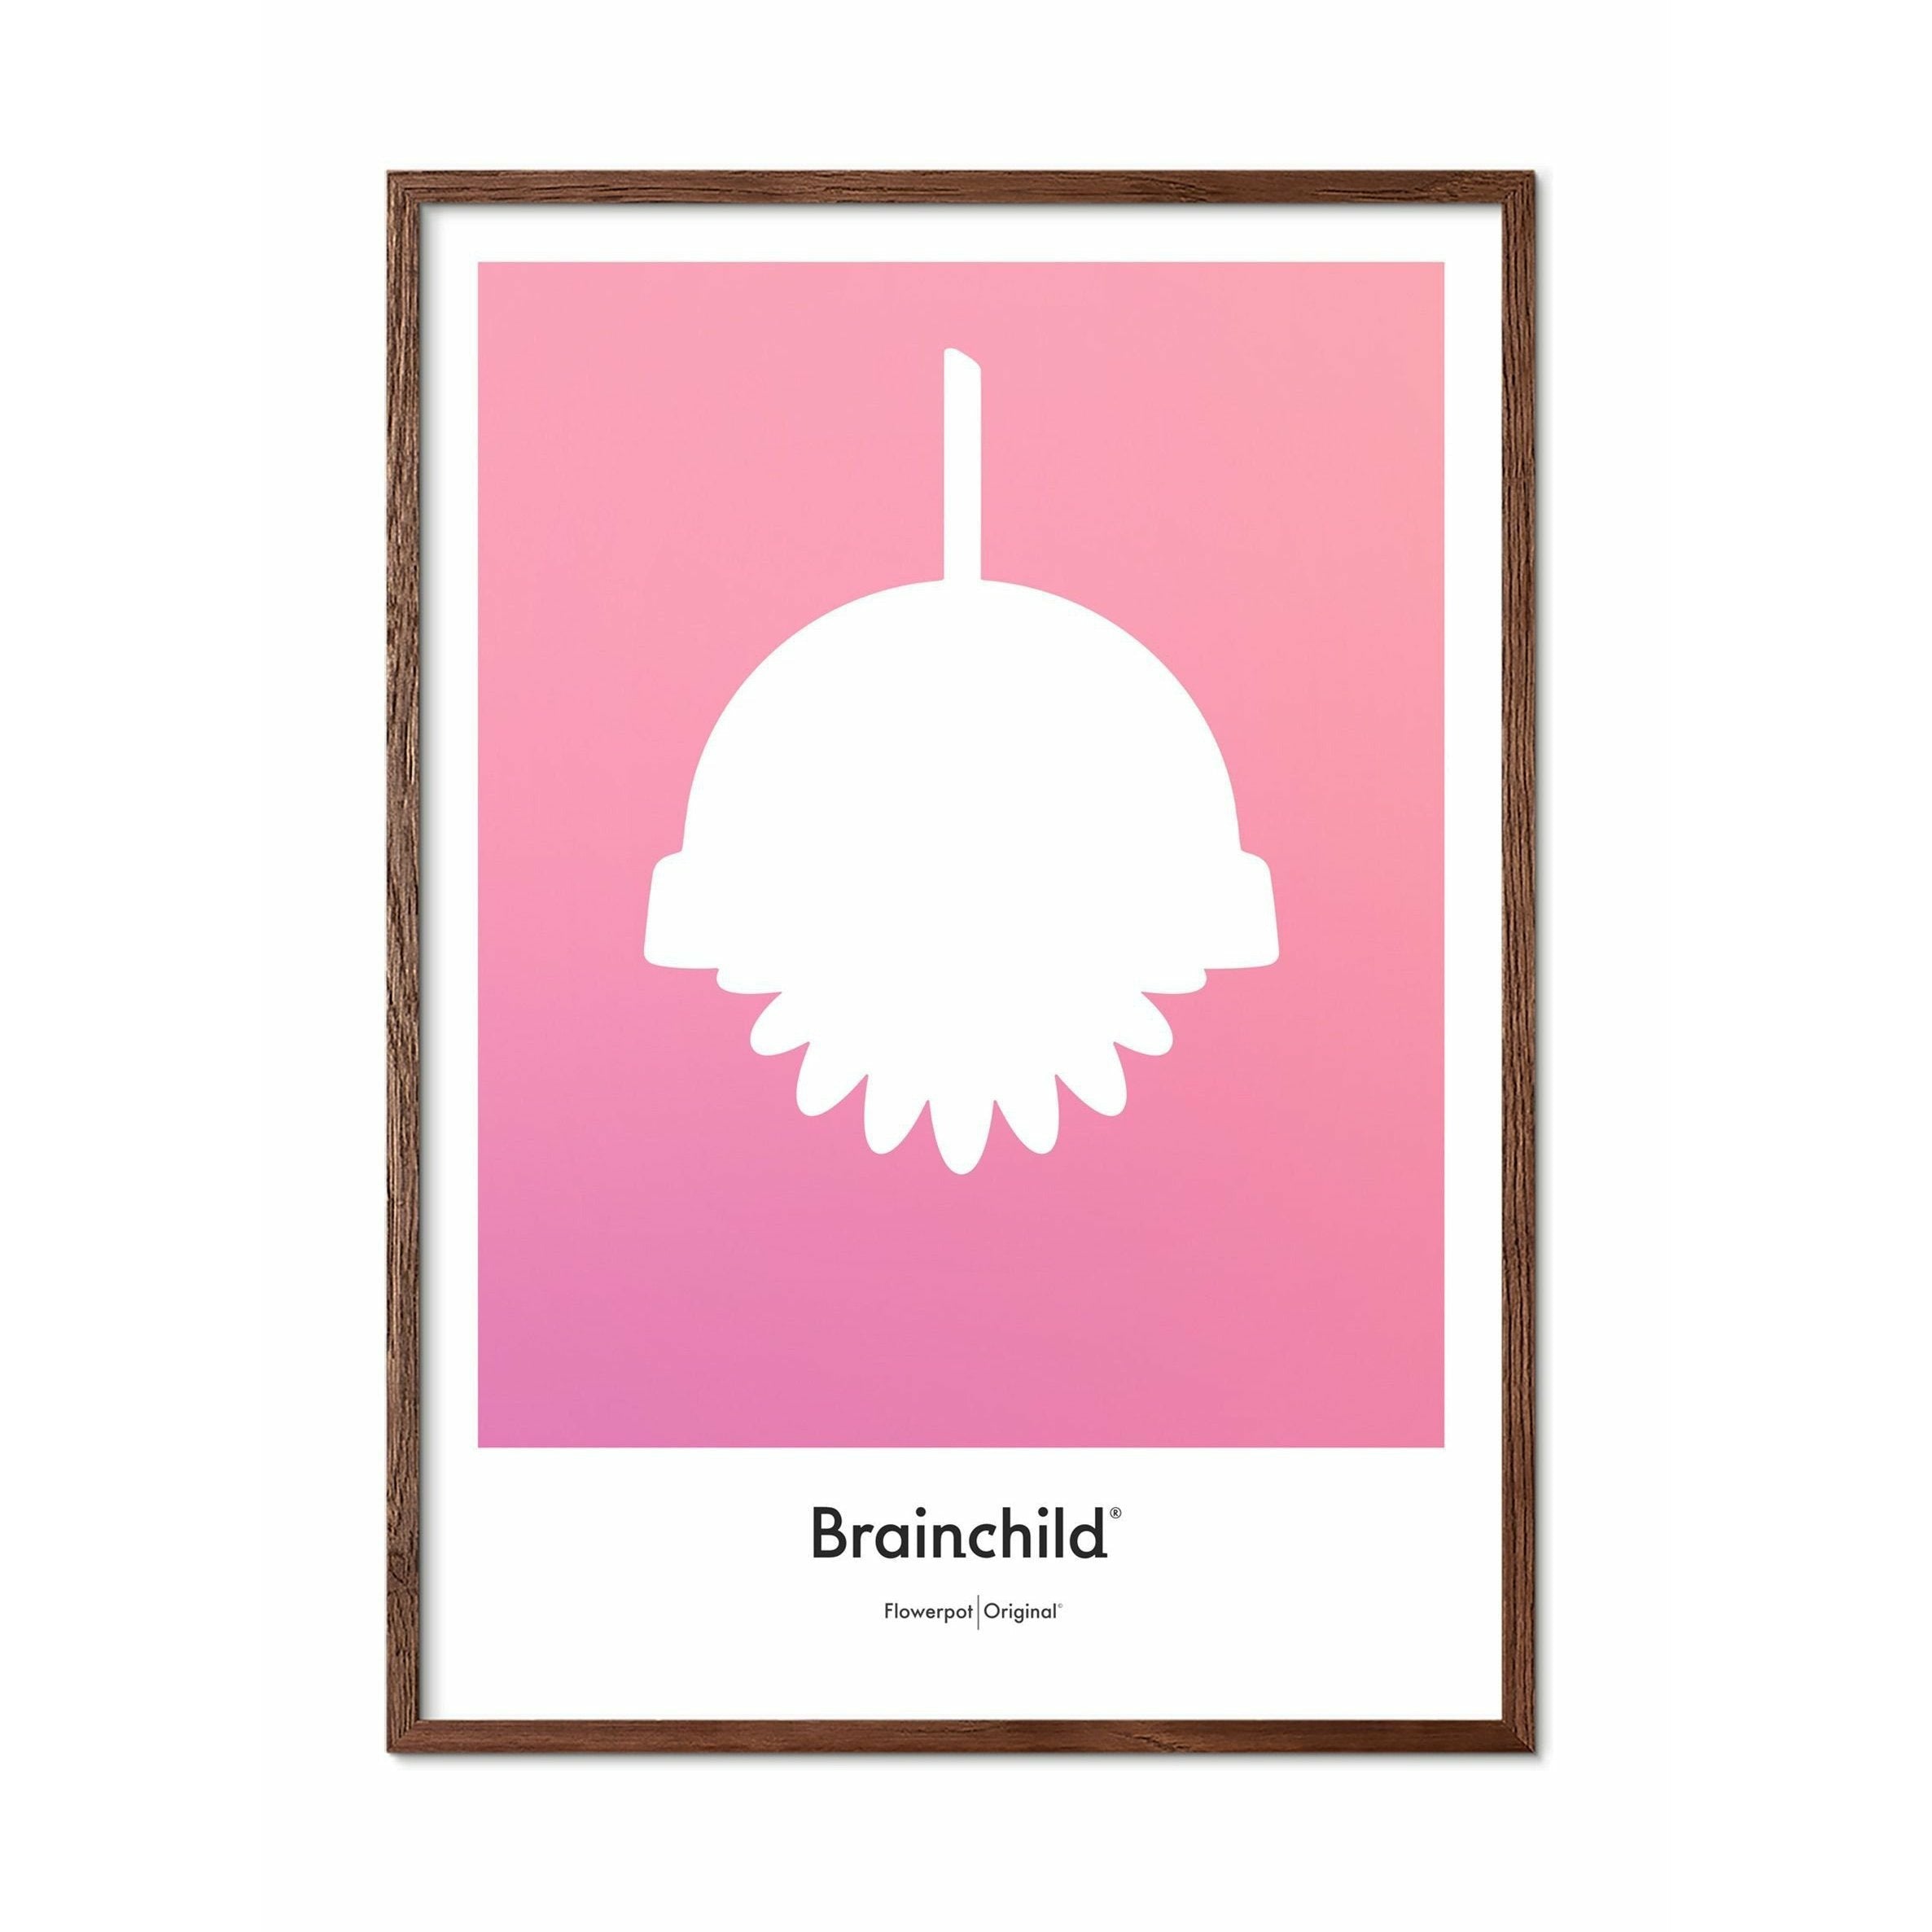 Brainchild Blumentopf Design Icon Poster, Rahmen aus dunklem Holz 50x70 Cm, Rosa